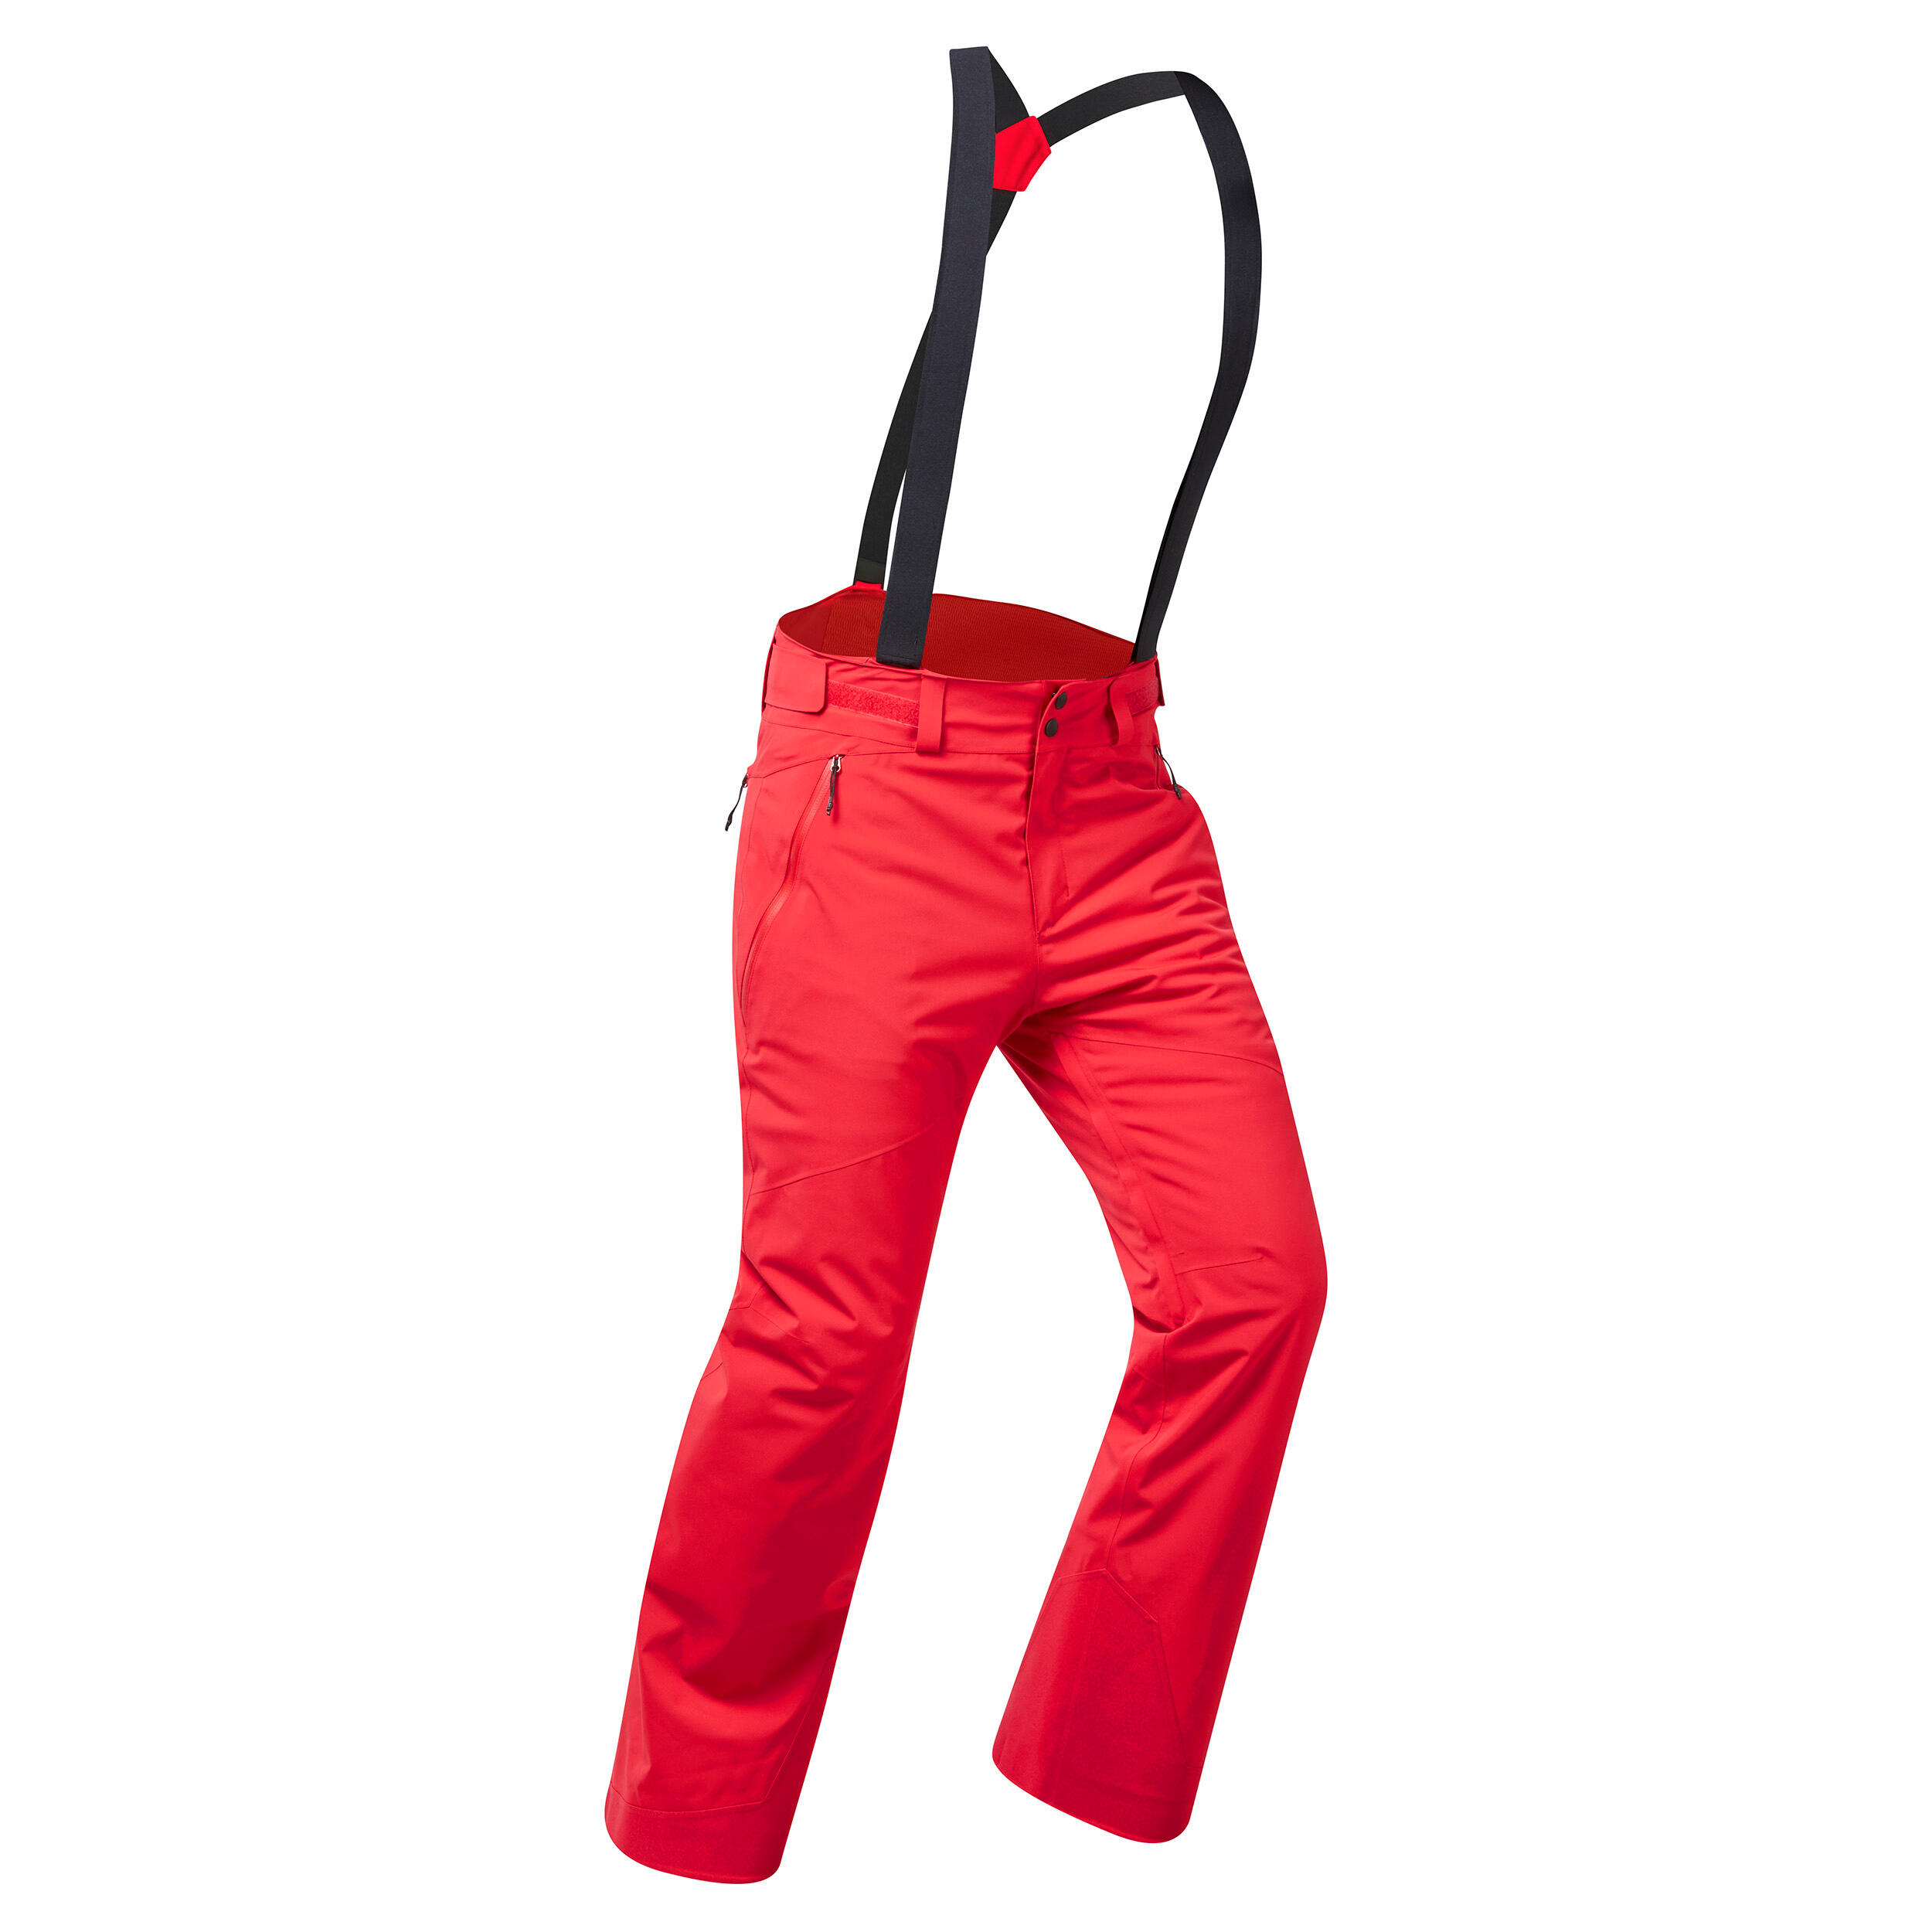 Pantalon Calduros Impermeabil Schi 580 Rosu Barbati